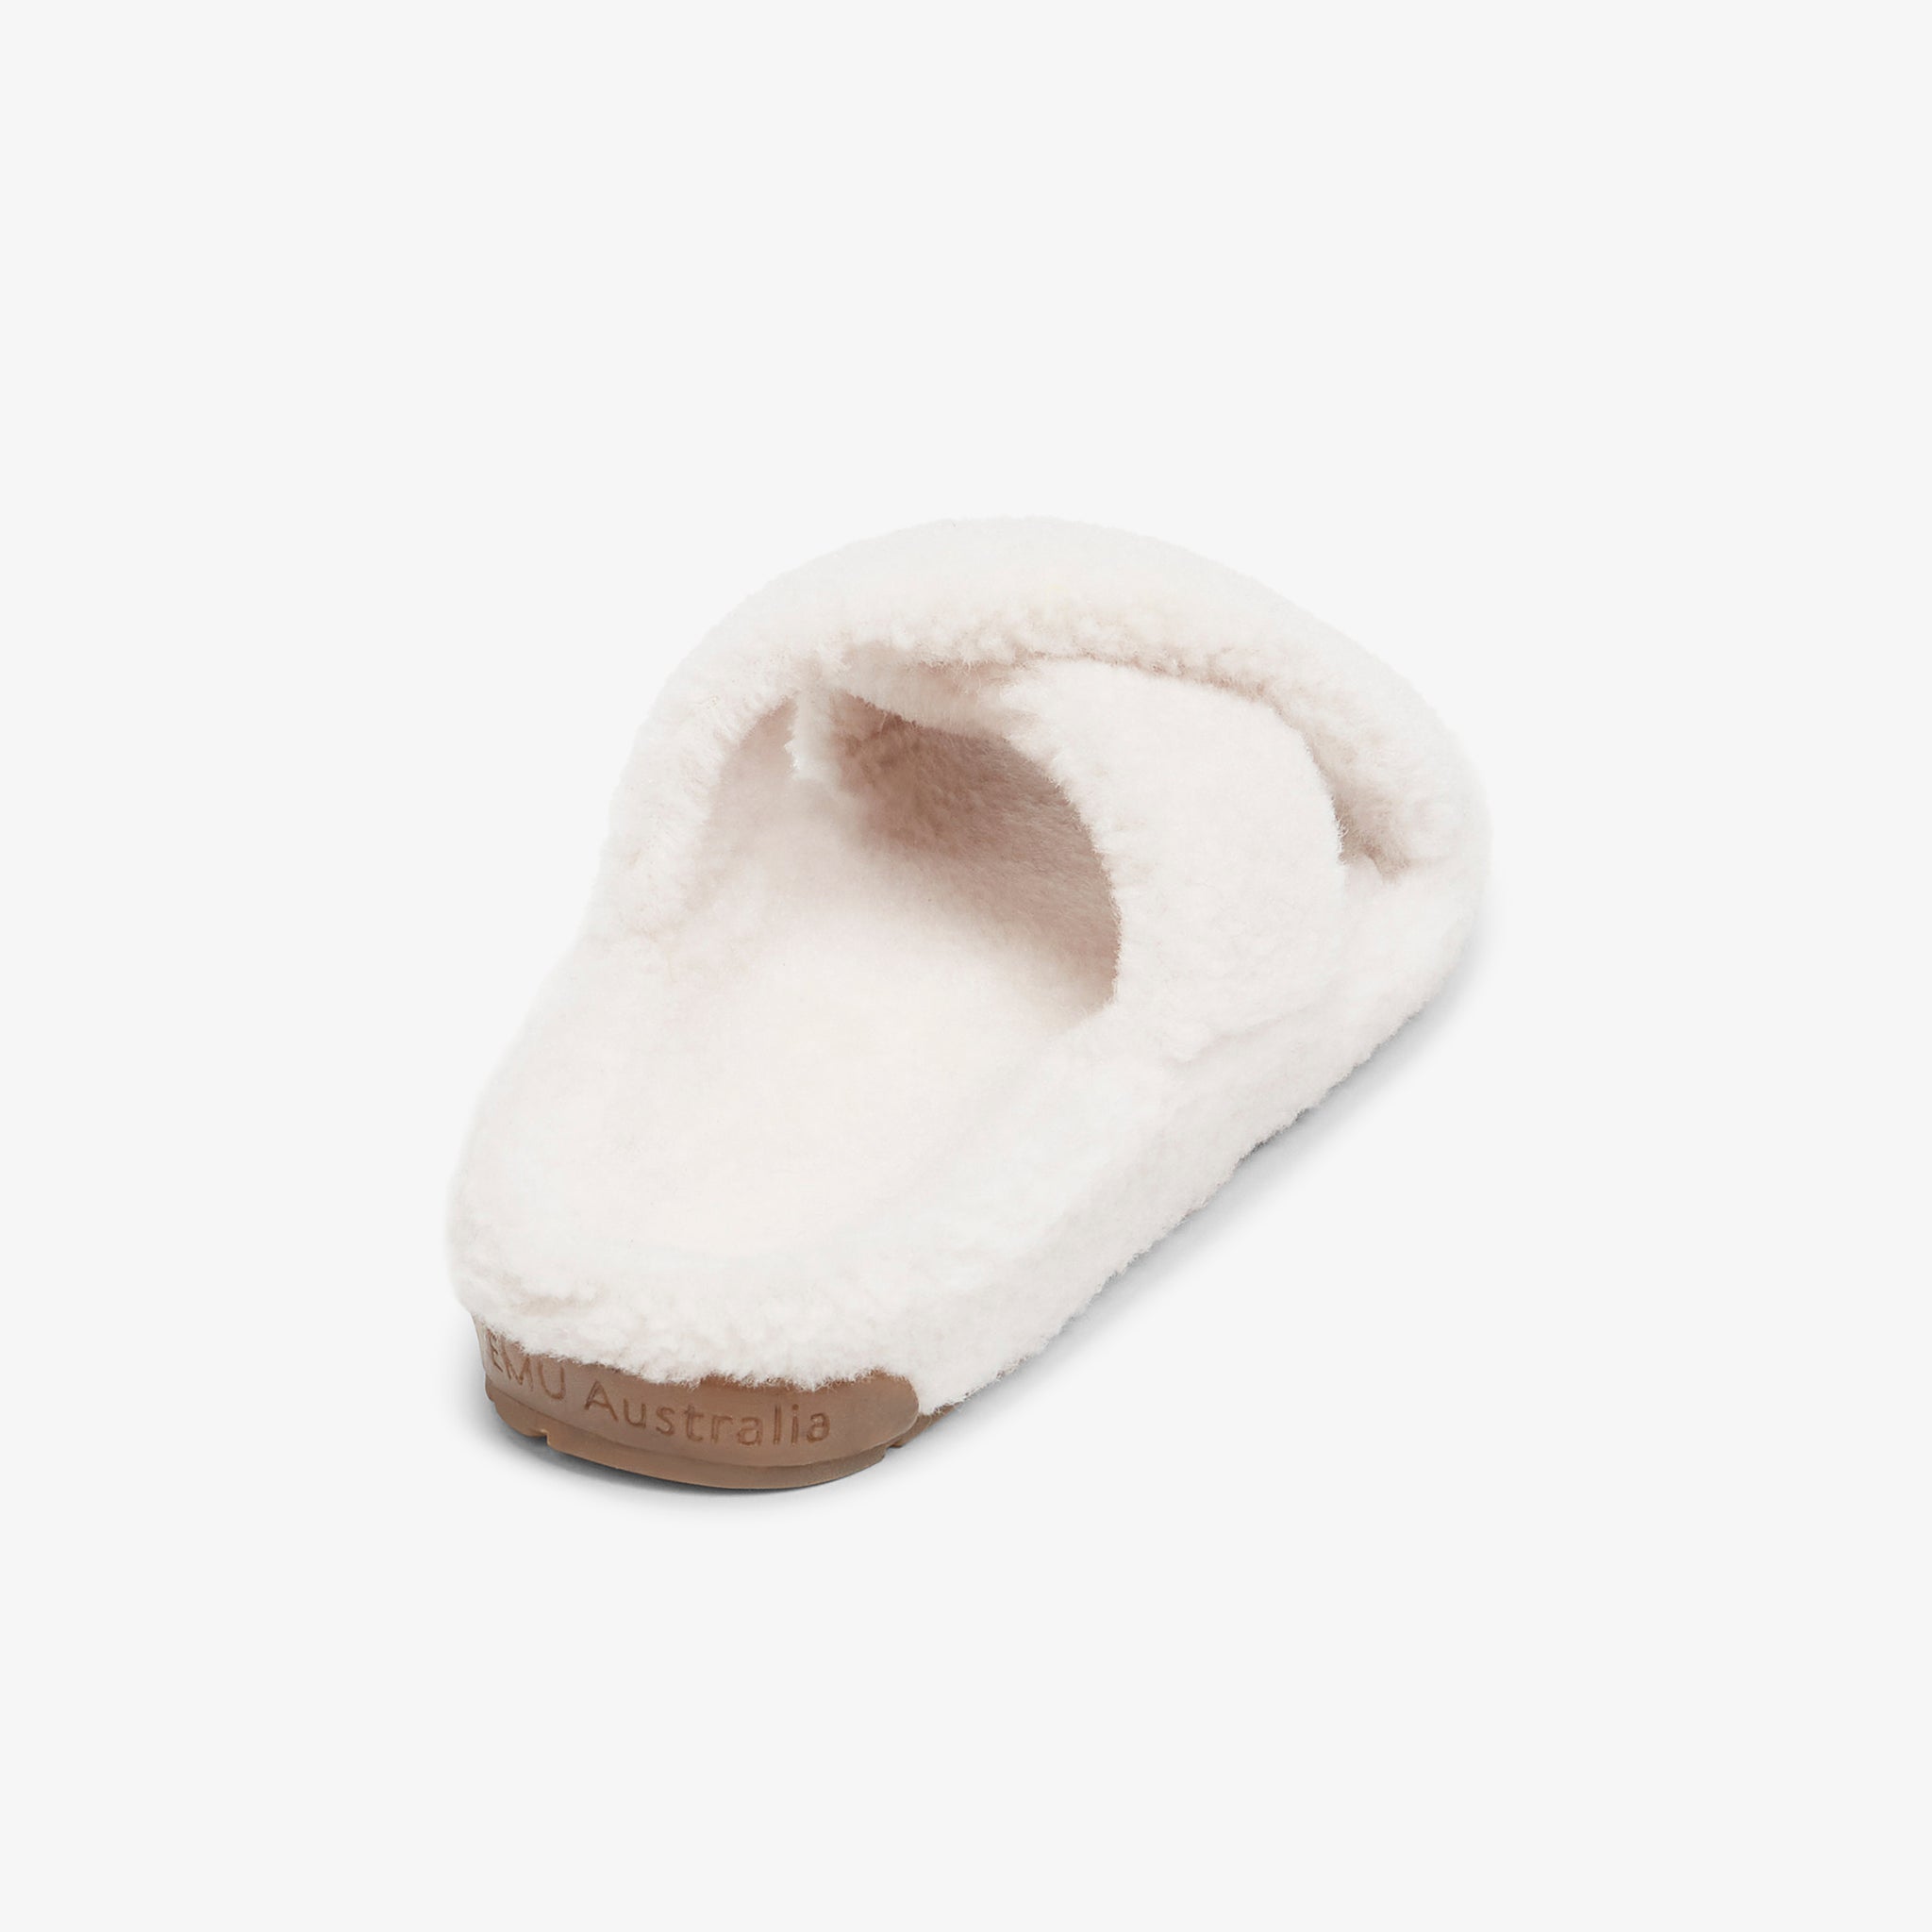 Packshot image of the emu slipper in natural